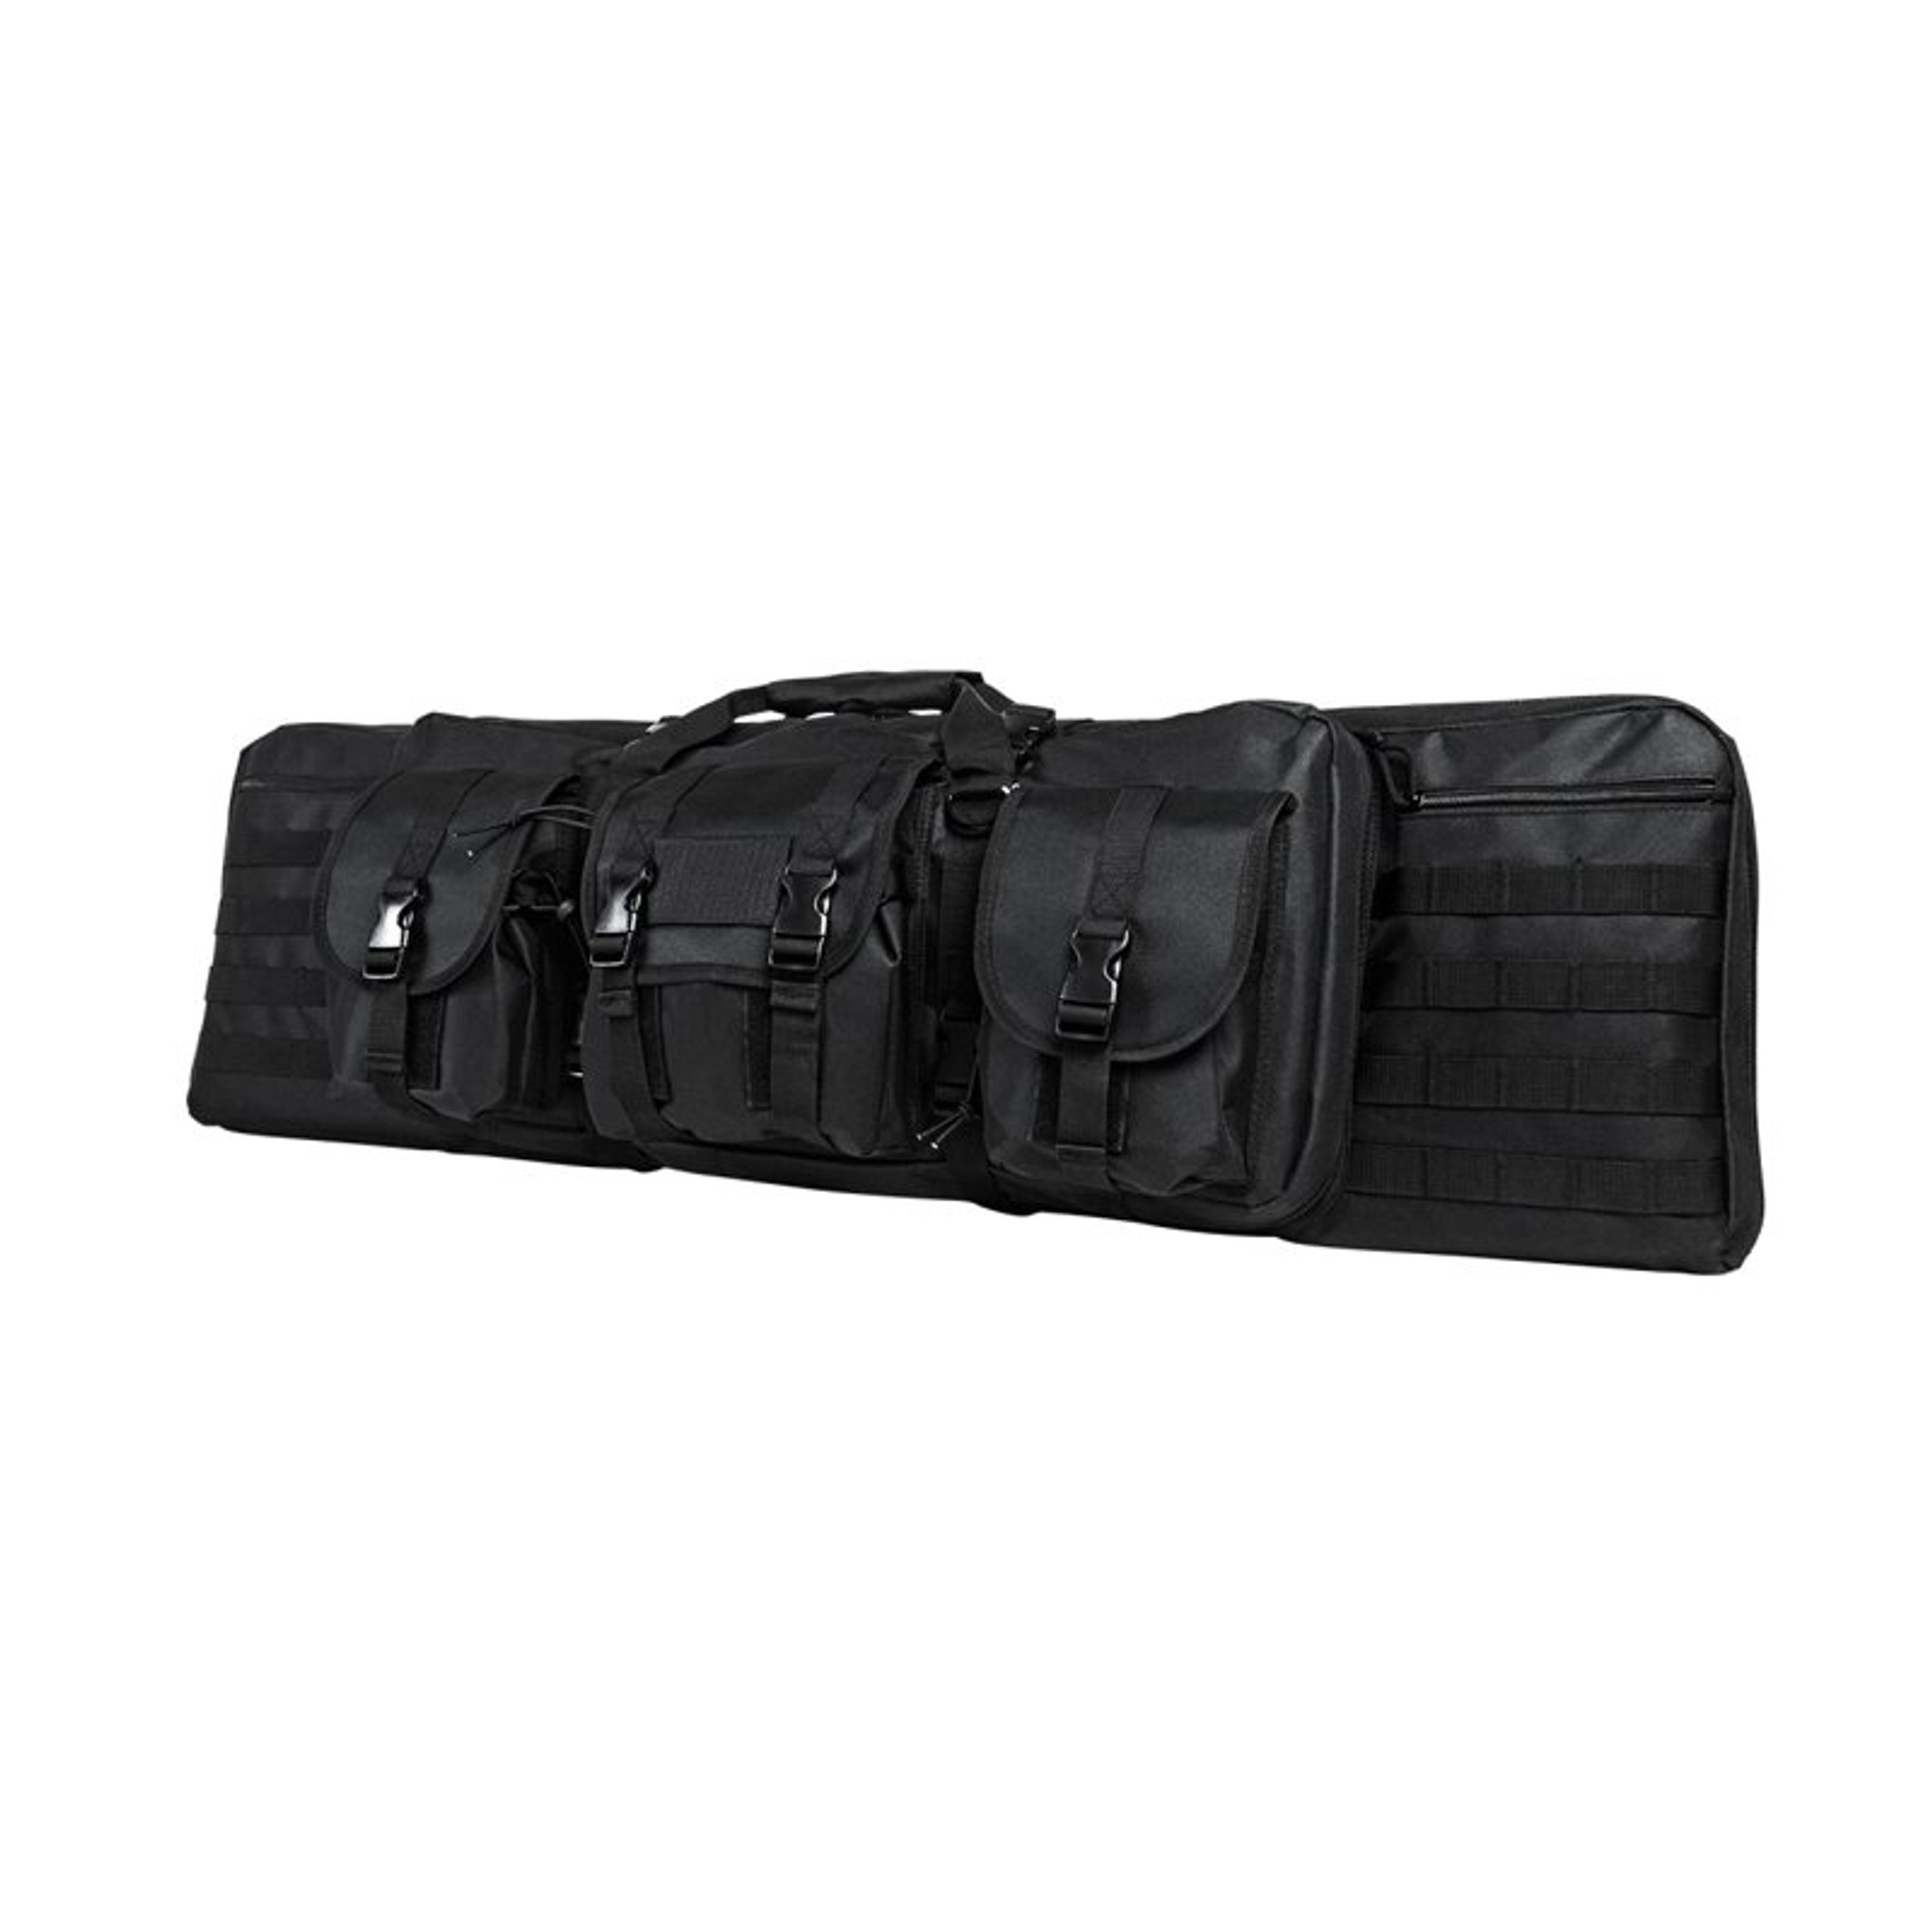 NcStar Double Gun Bag 42 Inch - Black